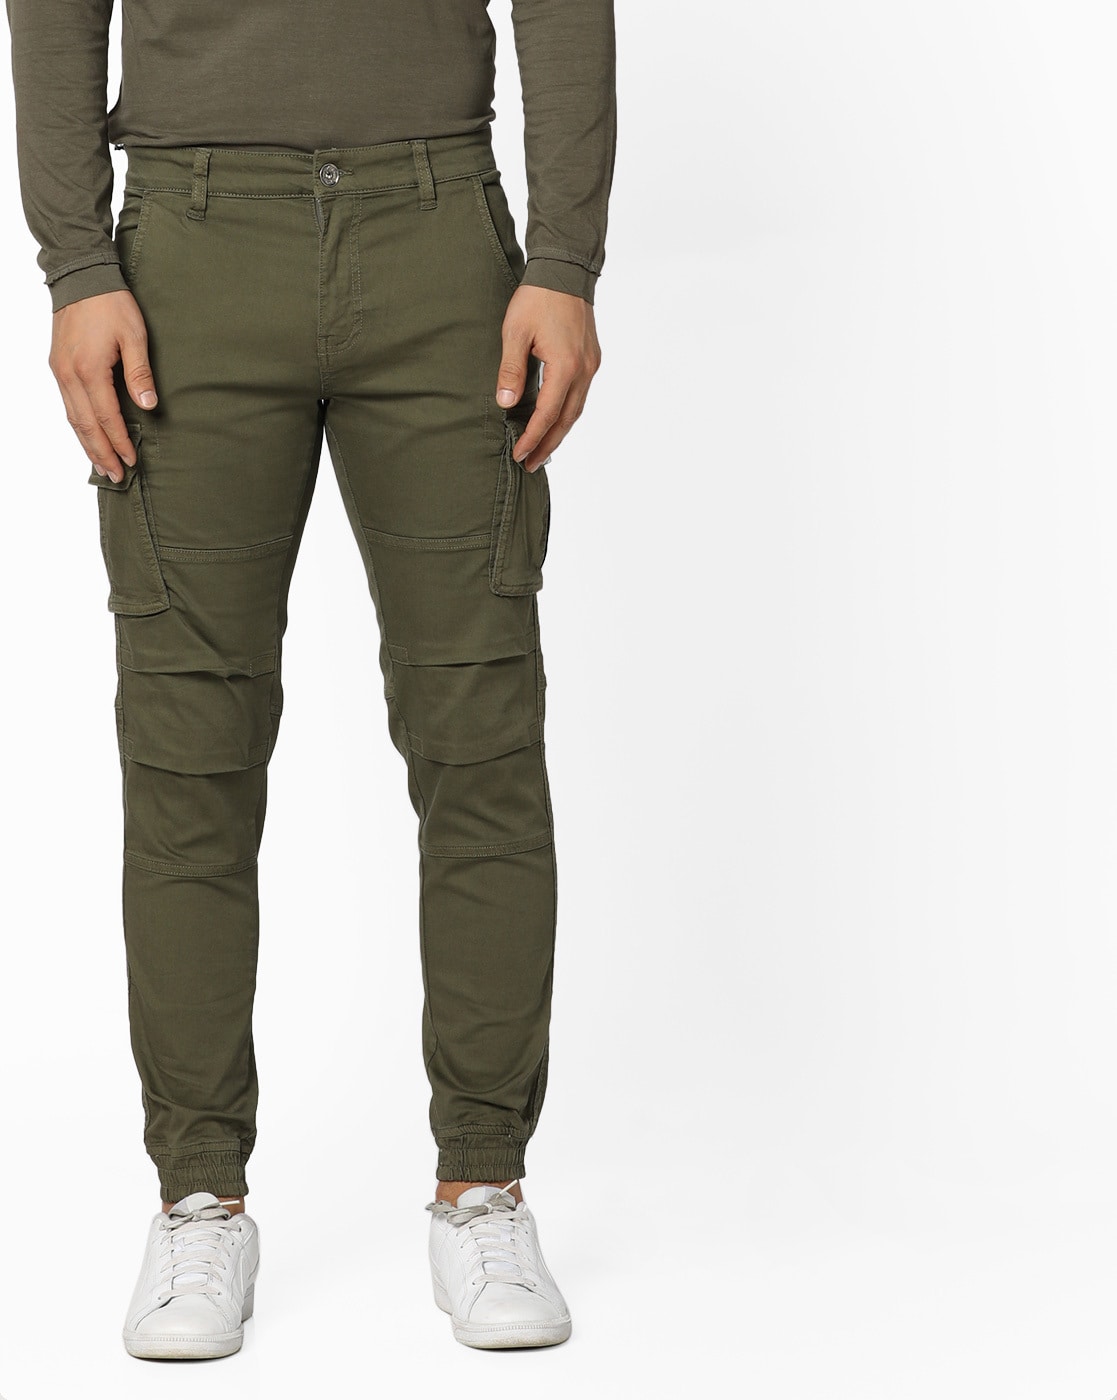 olive green skinny pants mens